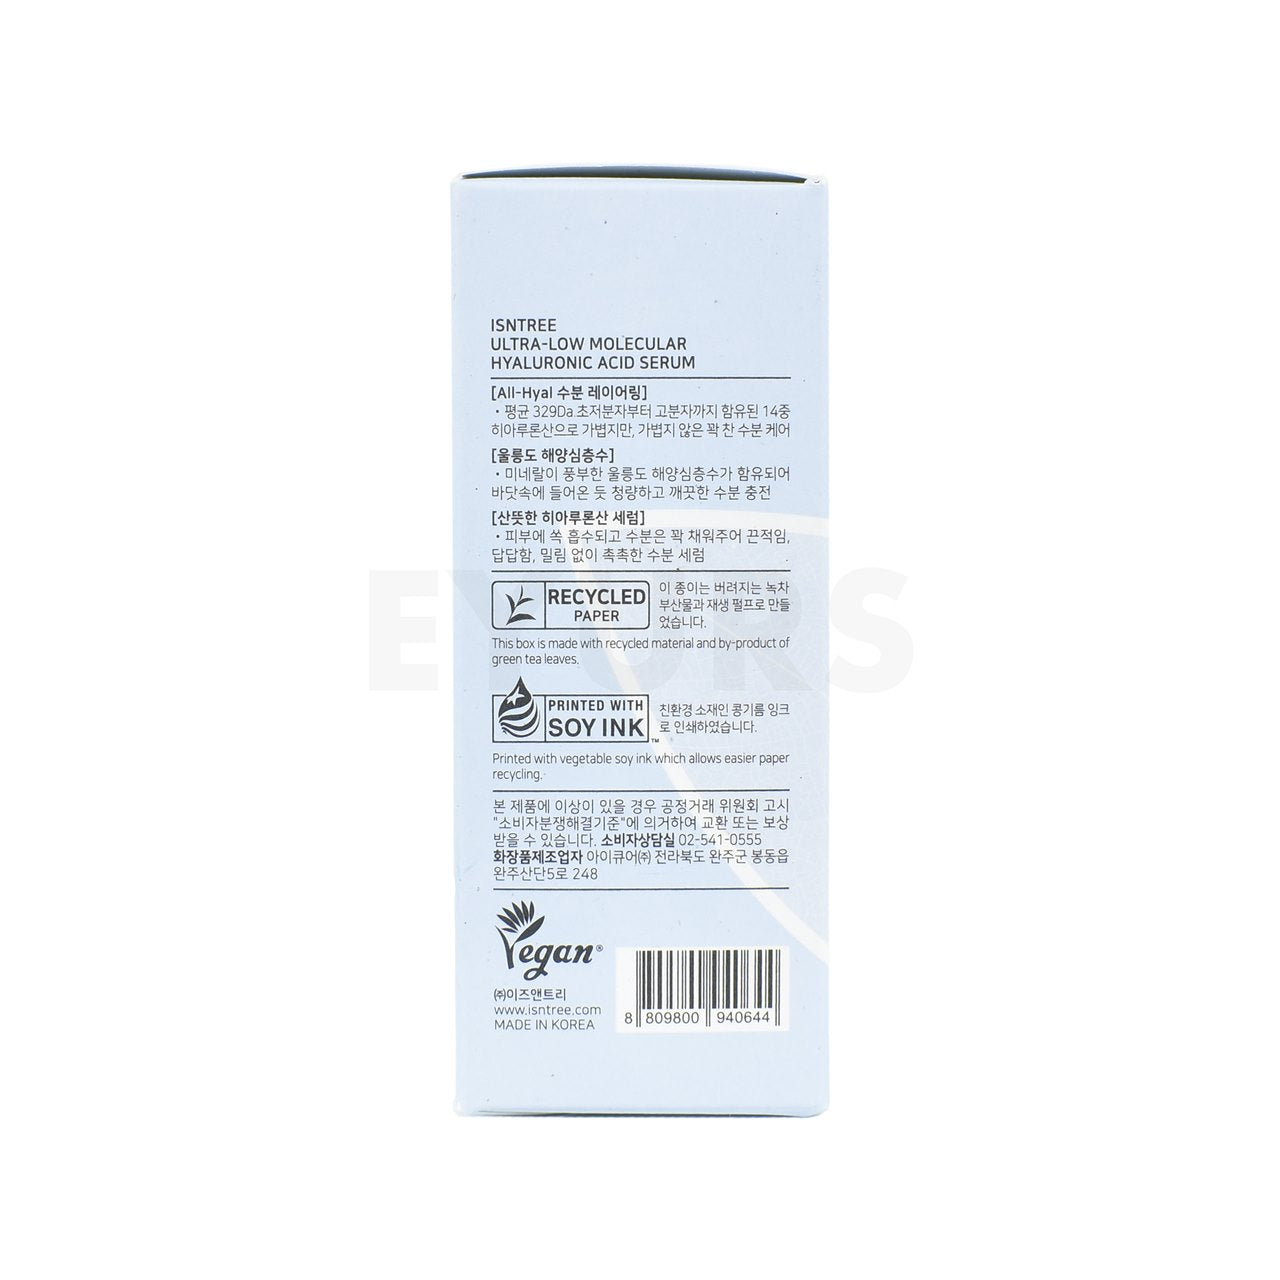  isntree ultra low molecular hyaluronic acid serum 50ml left side packaging